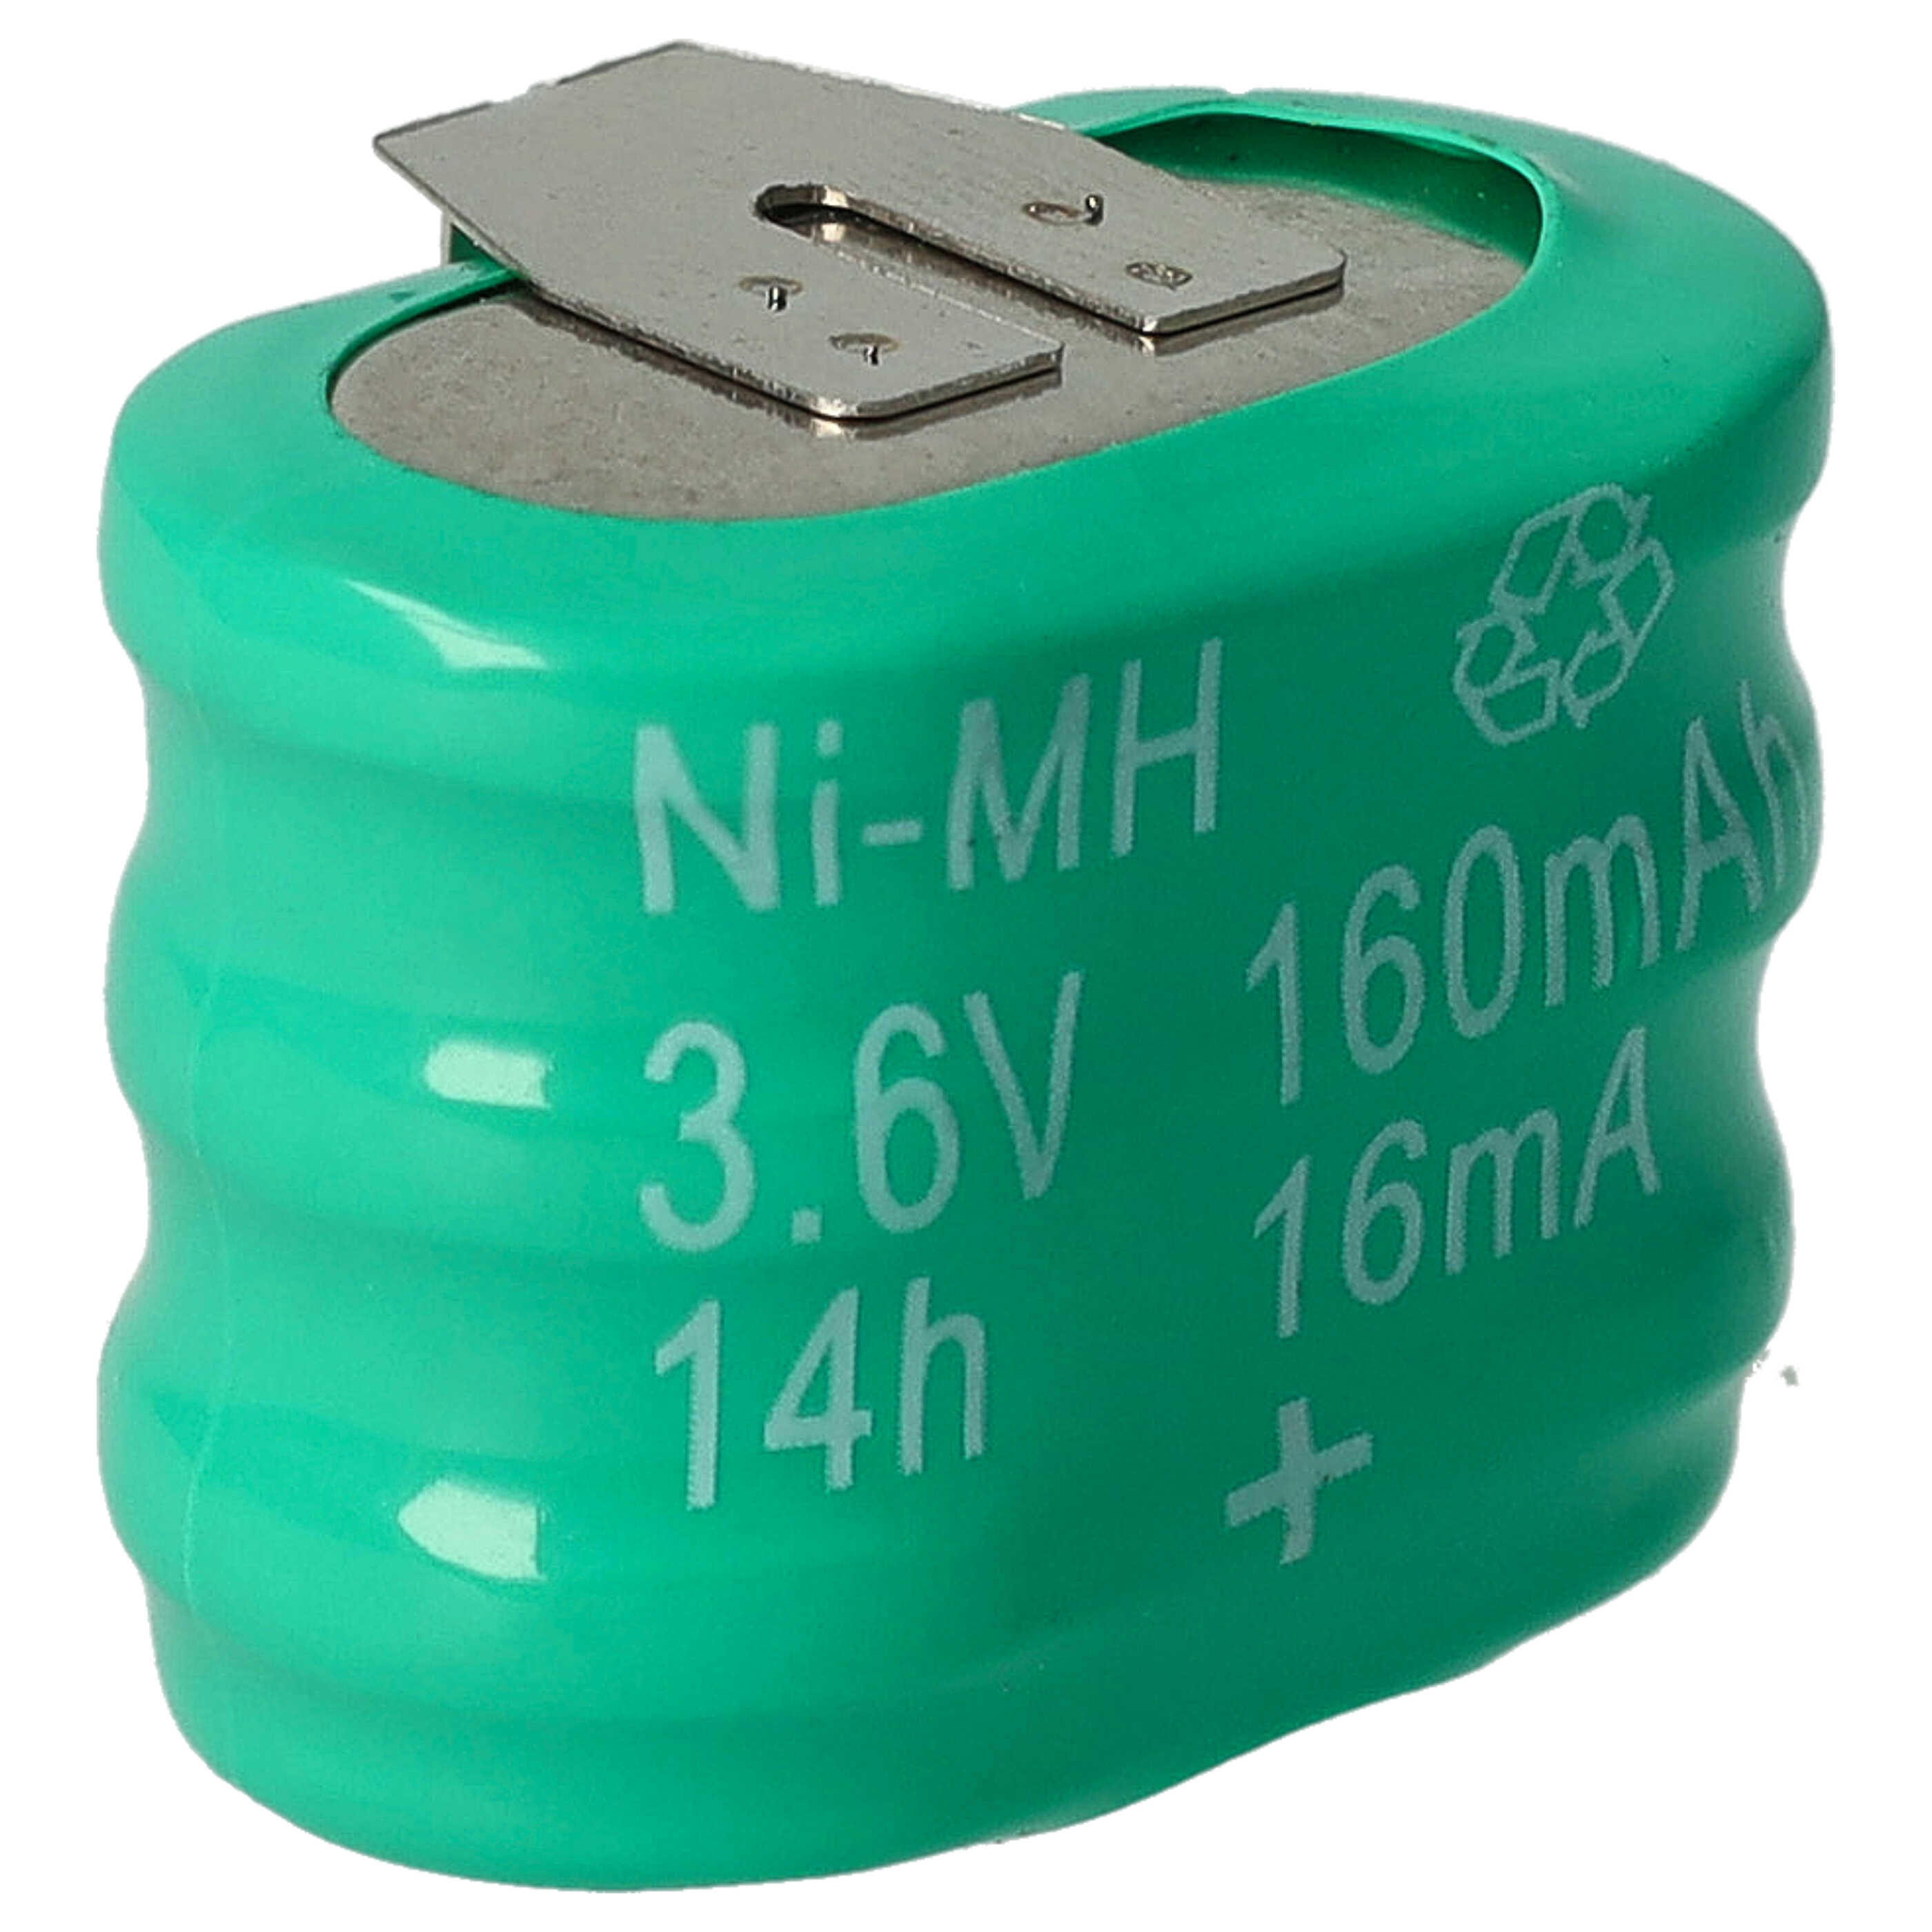 Akumulator guzikowy (3x ogniwo) typ 3/V150H 3 pin do modeli, lamp solarnych itp. - 150 mAh, 3,6 V, NiMH